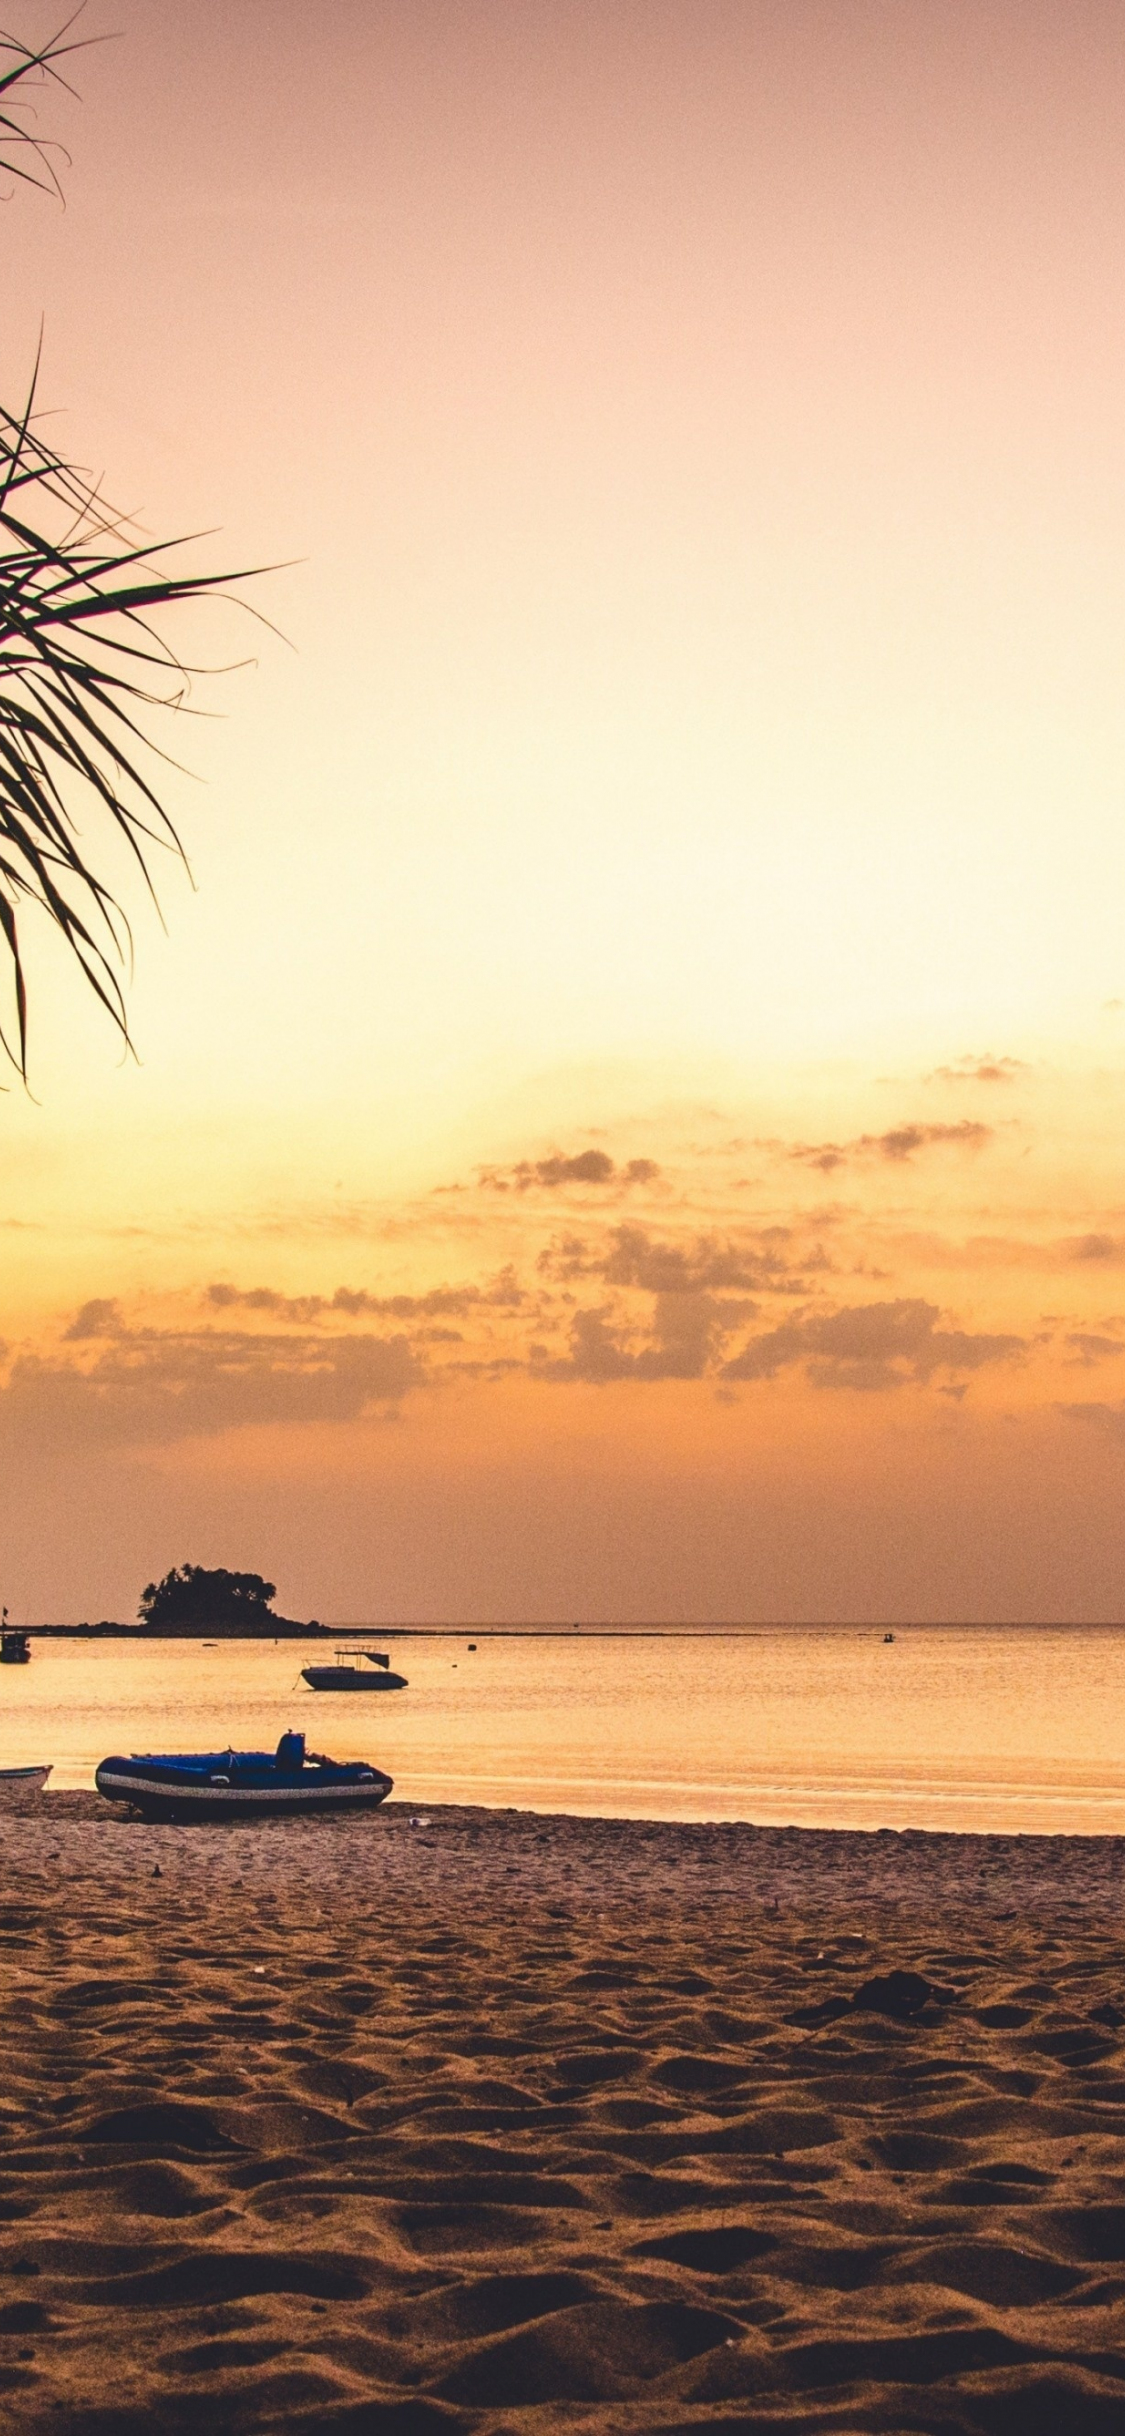 Download 1125x2436 Wallpaper Beach Sand Sky Palm Tree Sunset